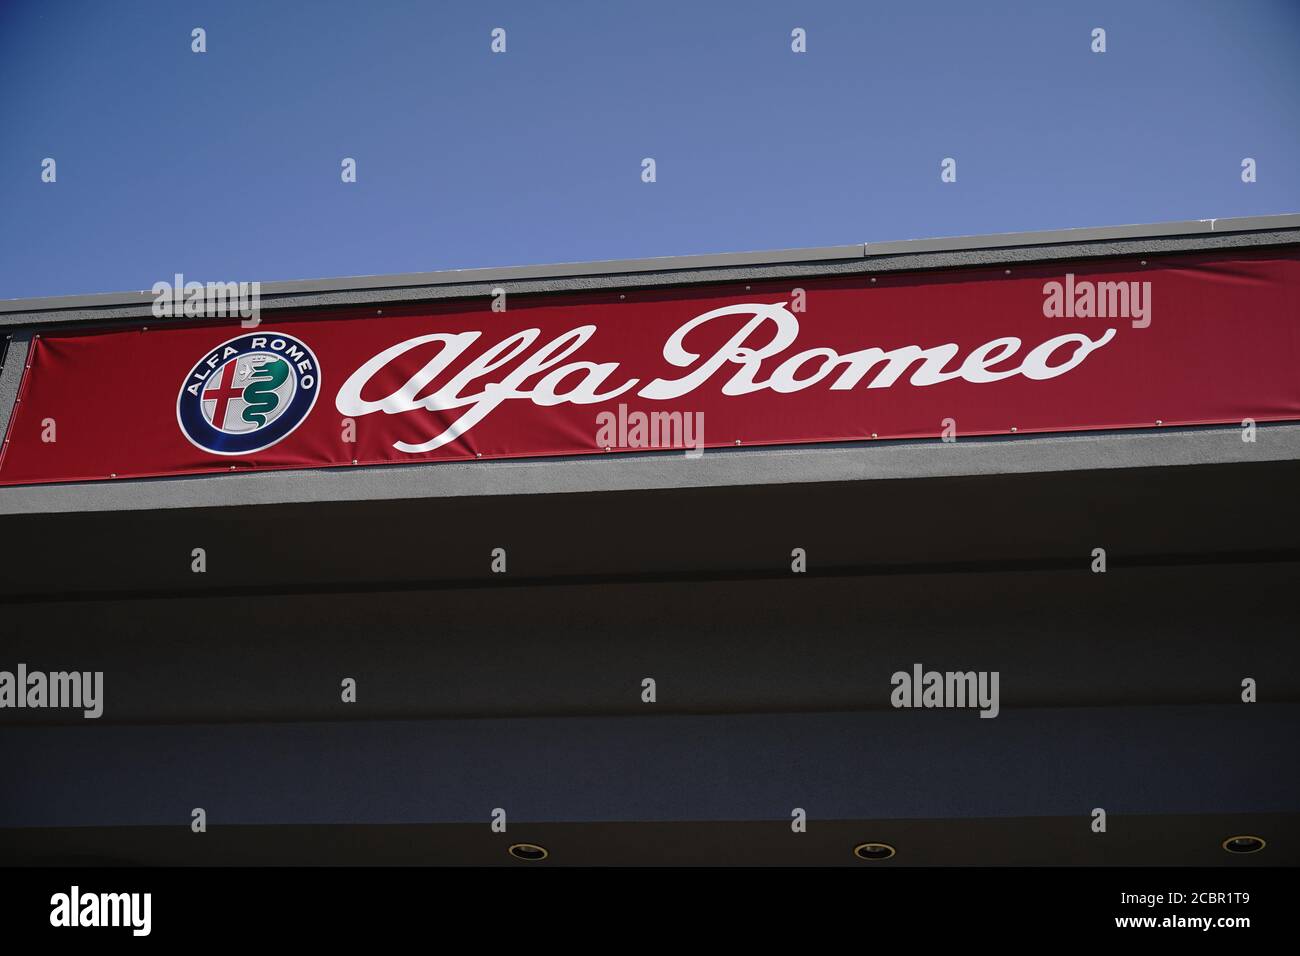 July 4, 2020, New York, United States: Alfa Romeo company logo seen on one of their car dealerships showrooms. (Credit Image: © John Nacion/SOPA Images via ZUMA Wire) Stock Photo